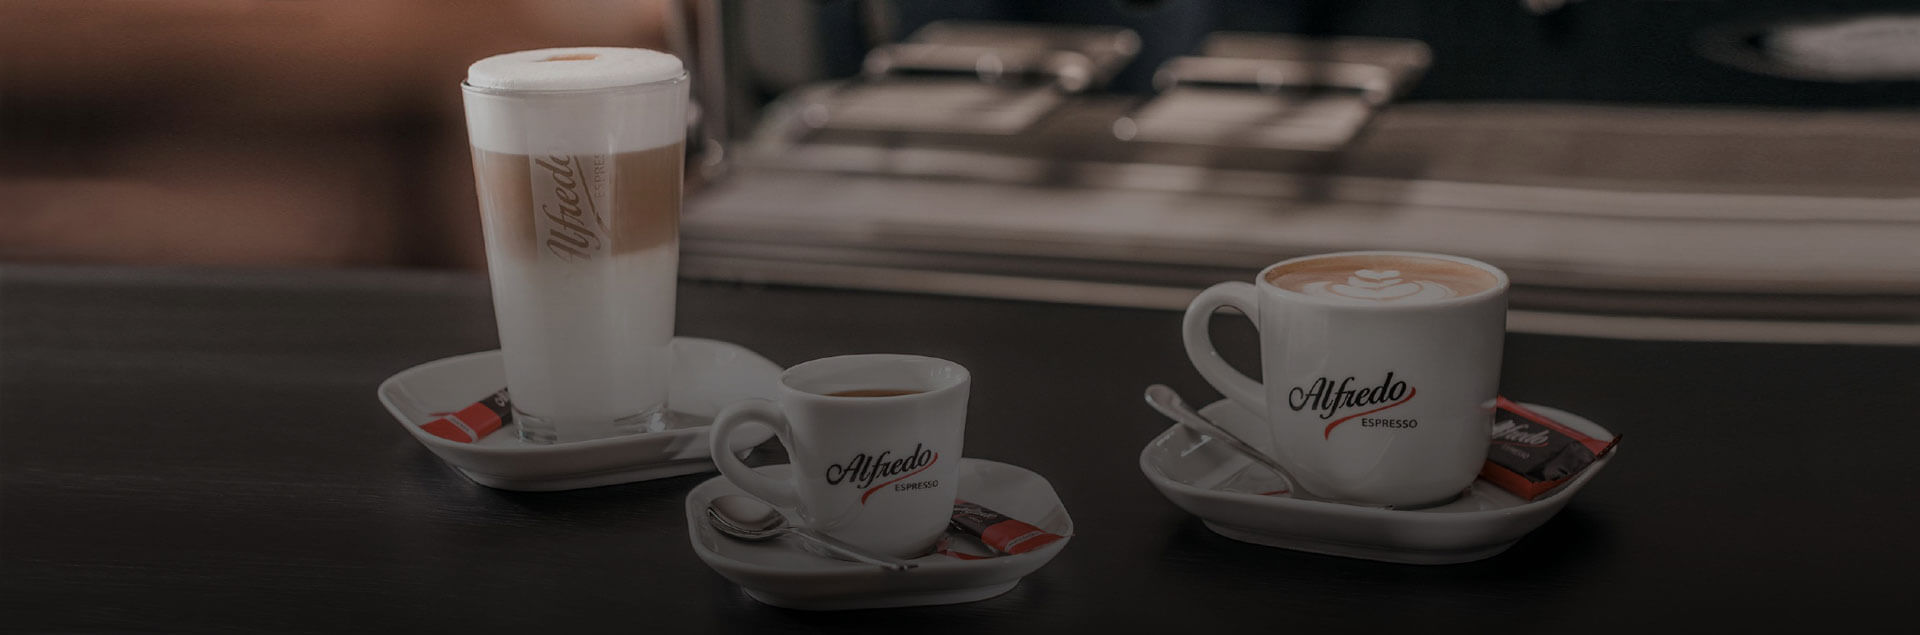 alfredo espresso rezepte klassiker jpg lang en GB width 1920 height 635 ext  